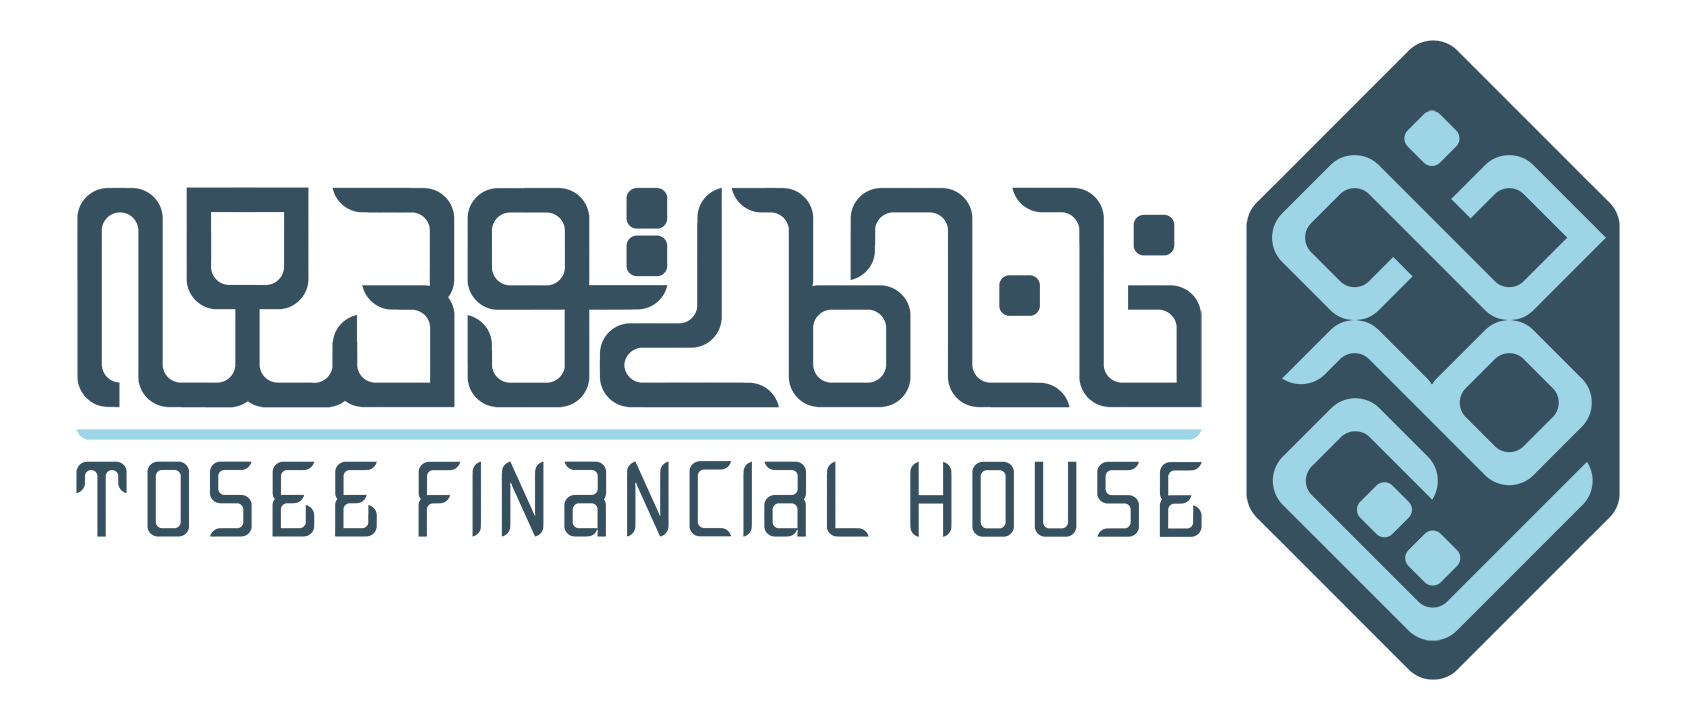 خانه مالی توسعه